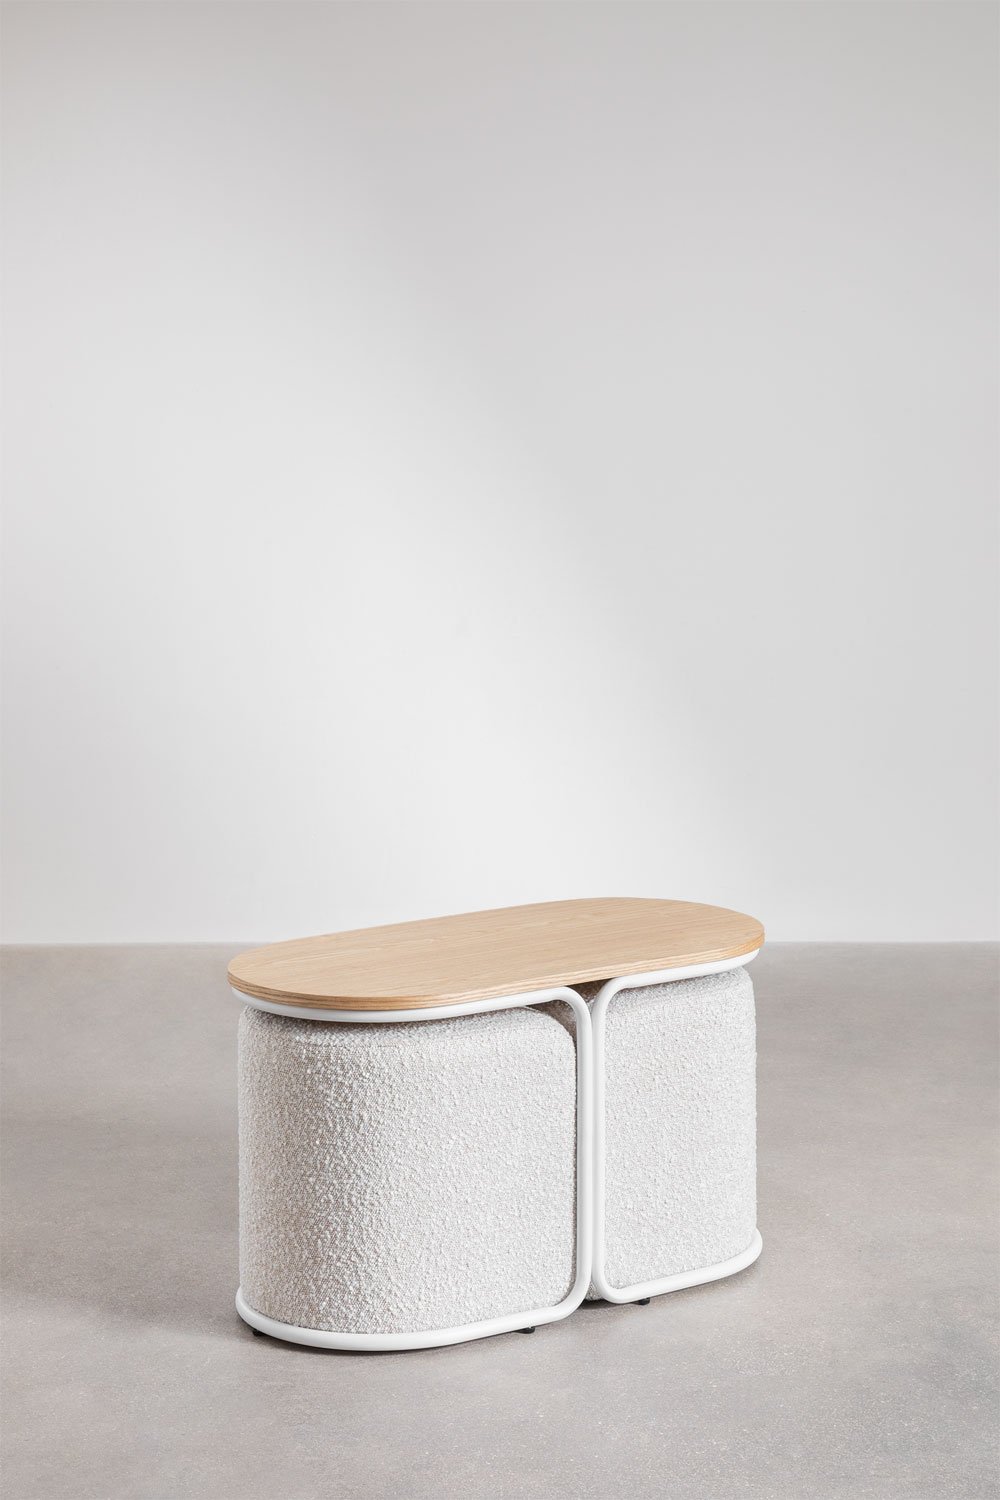 Table basse ovale en bois avec poufs Utred, image de la galerie 1